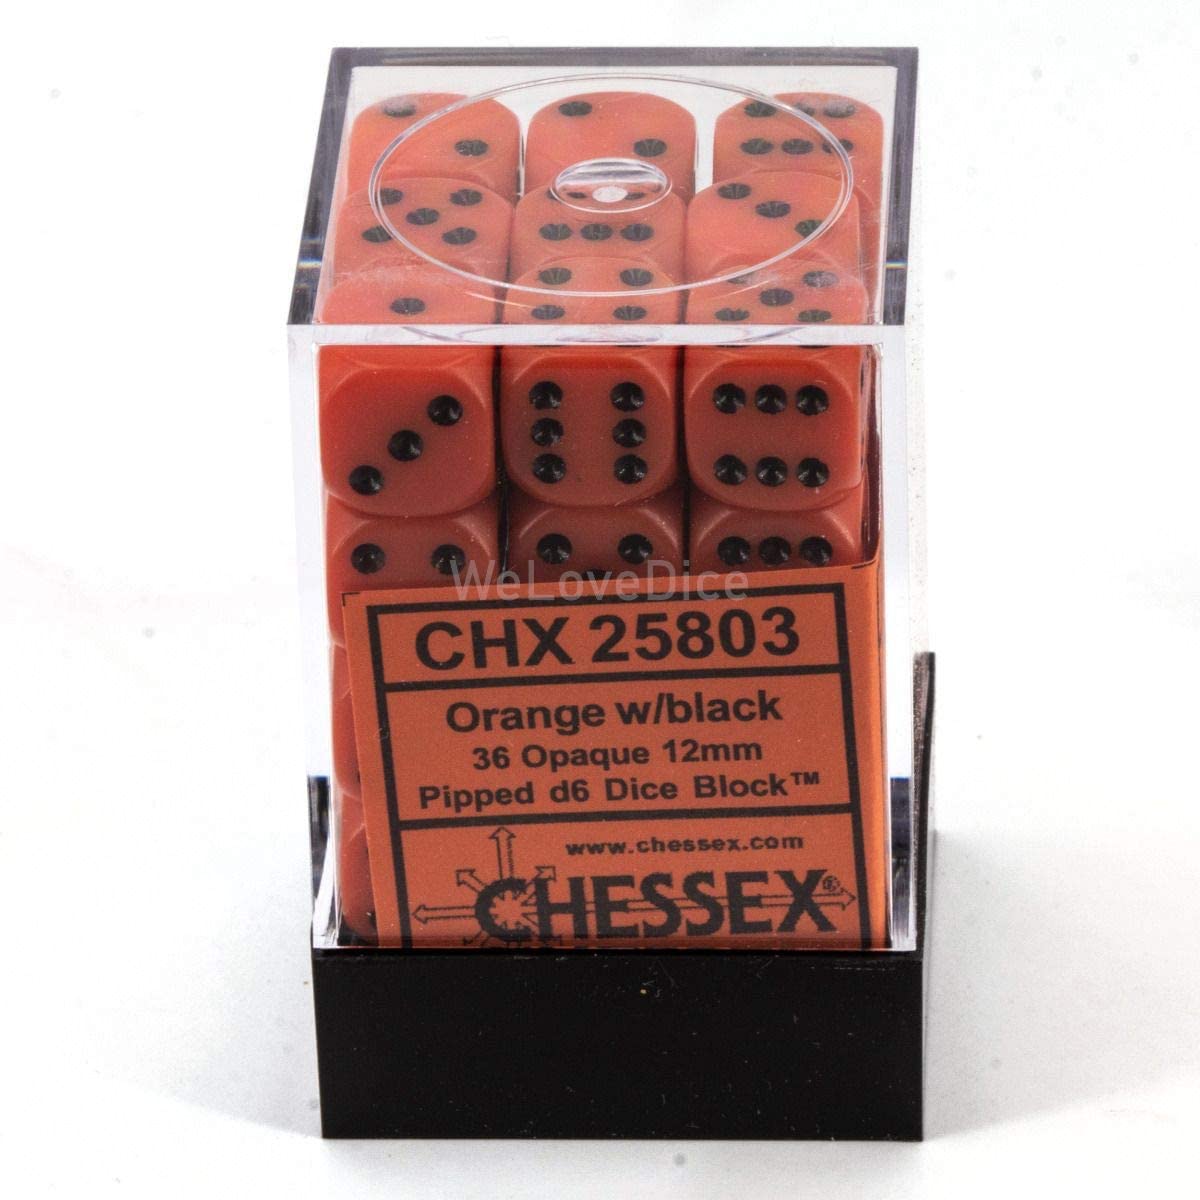 Chessex Dice: D6 Block - Opaque 12mm - Orange with Black (CHX 25803) - Gamescape